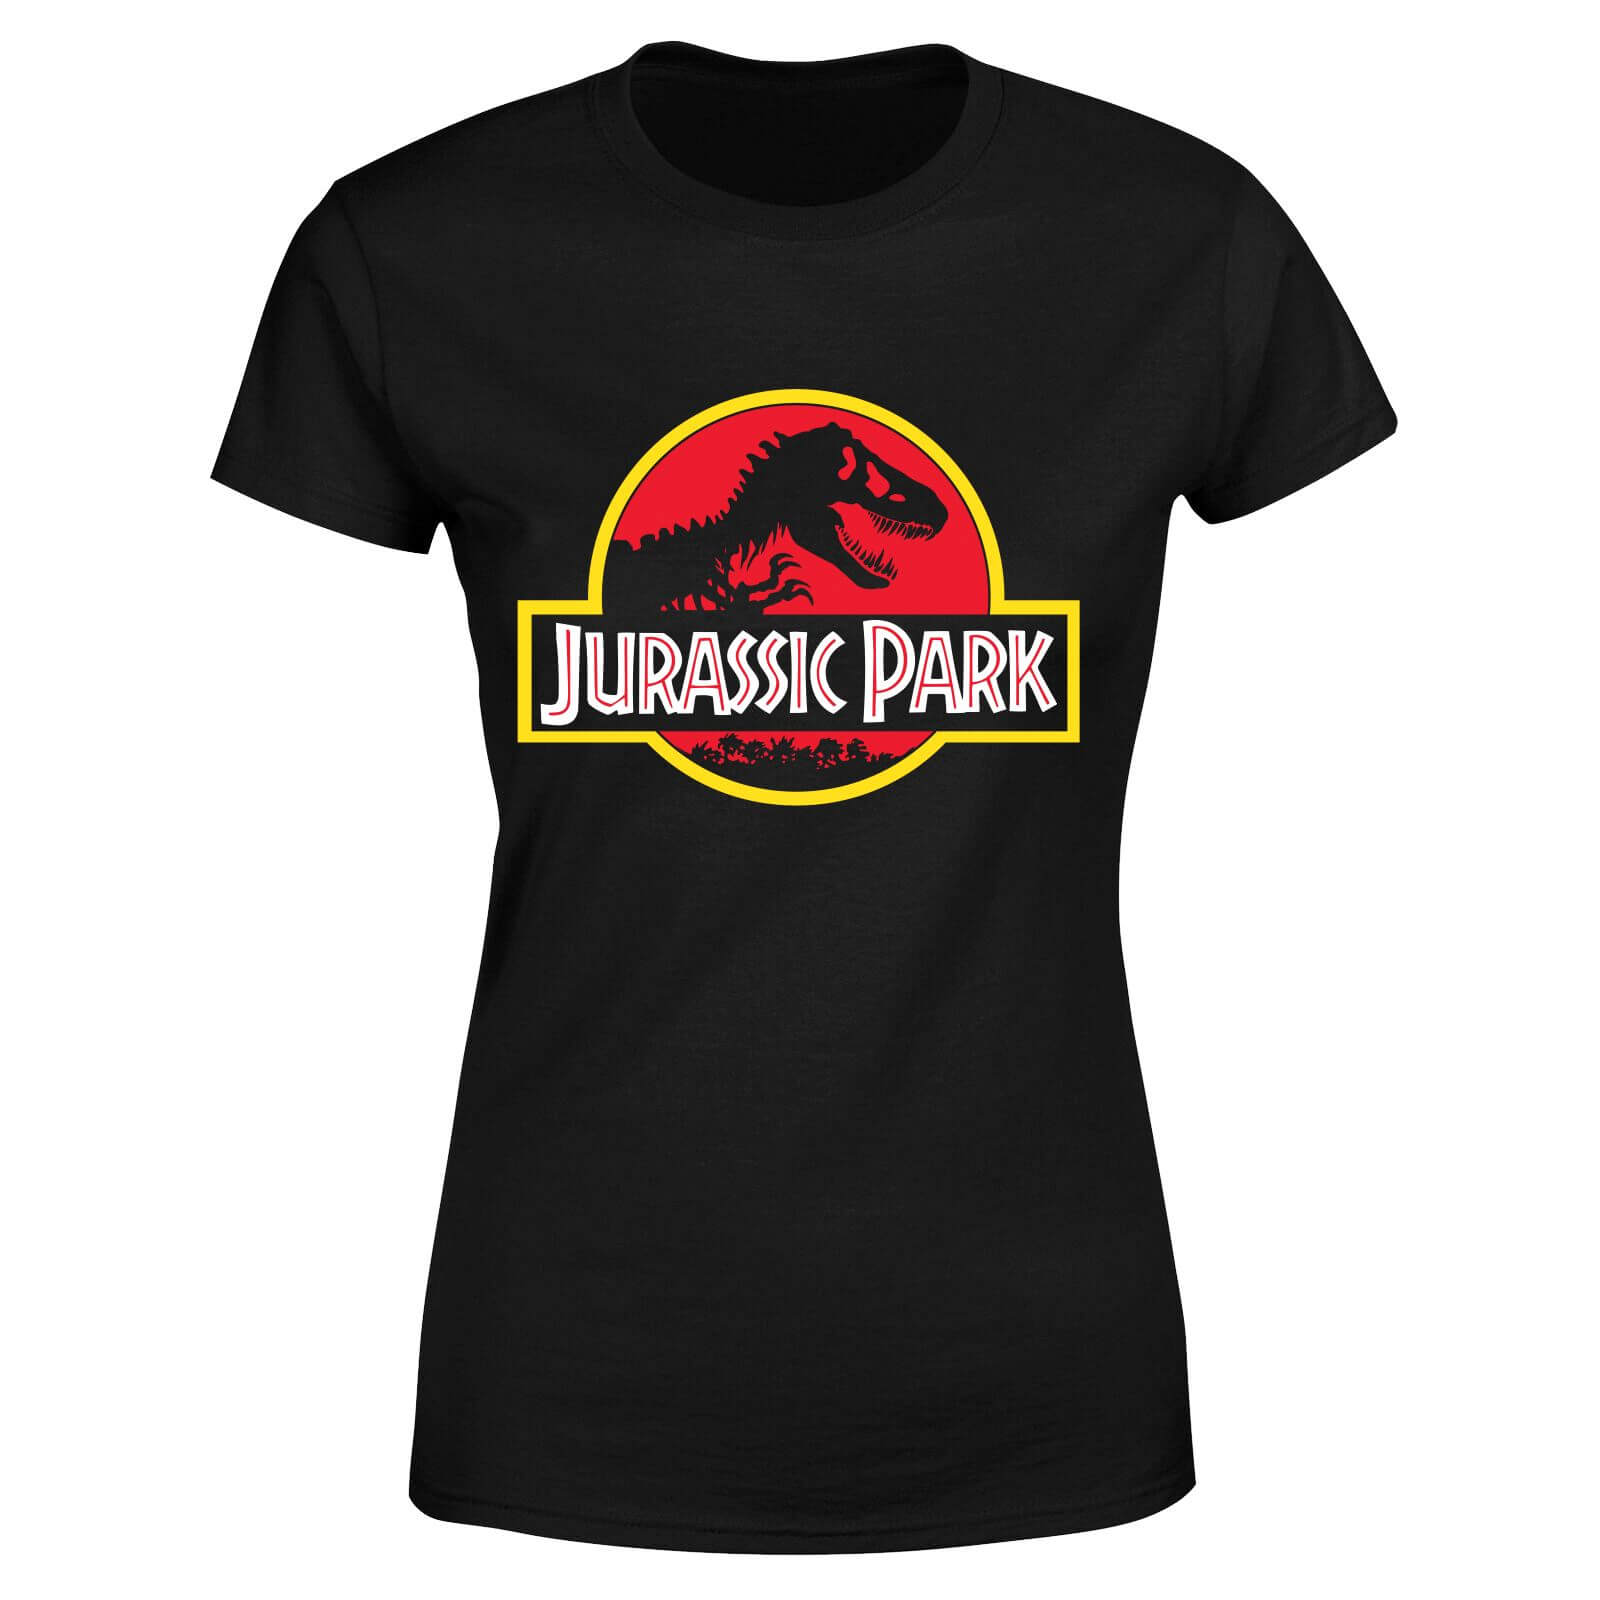 Classic Jurassic Park Logo Women's T-Shirt - Black - L